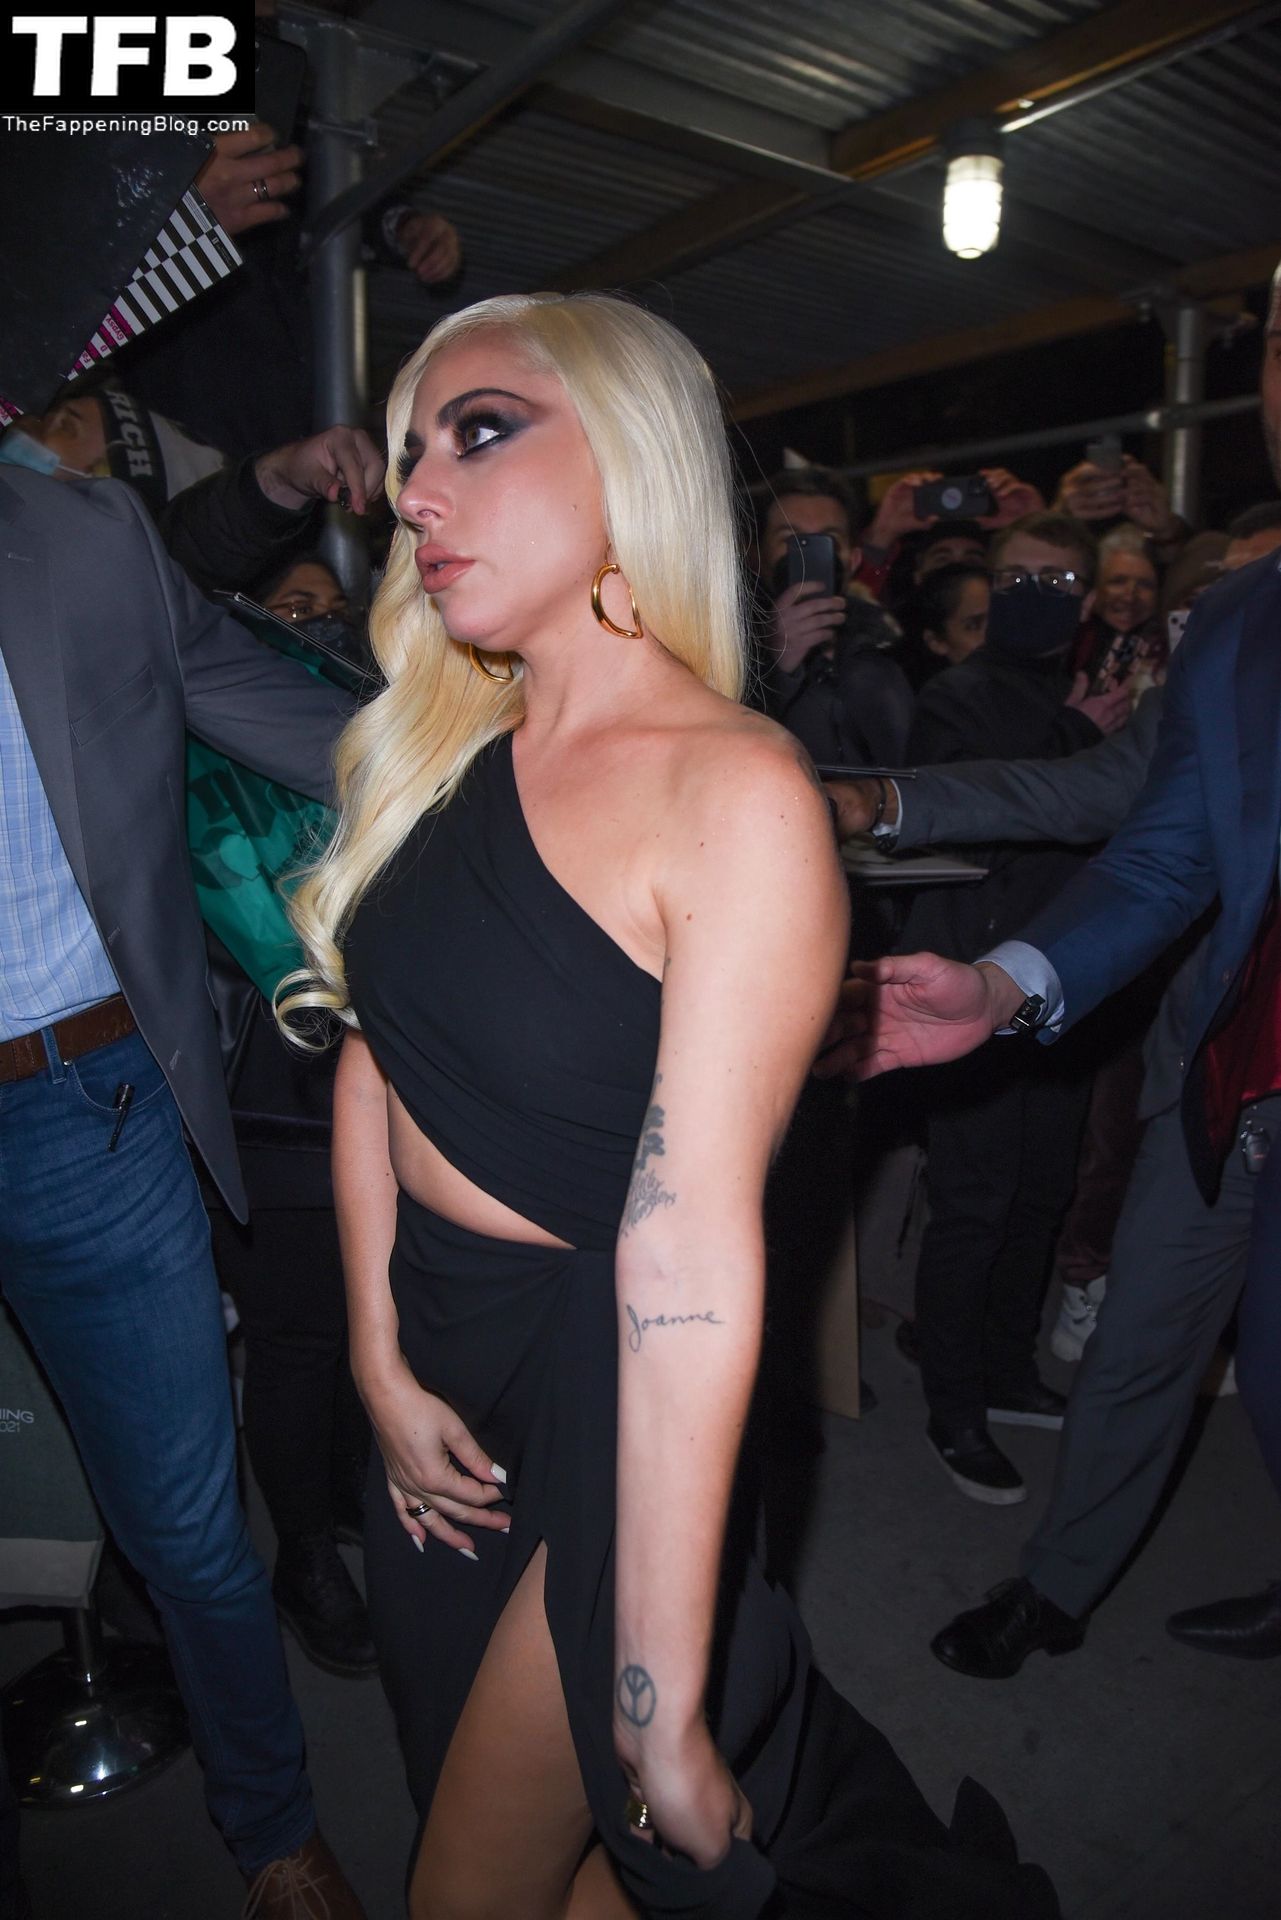 Lady-Gaga-Sexy-The-Fappening-Blog-47-1.jpg